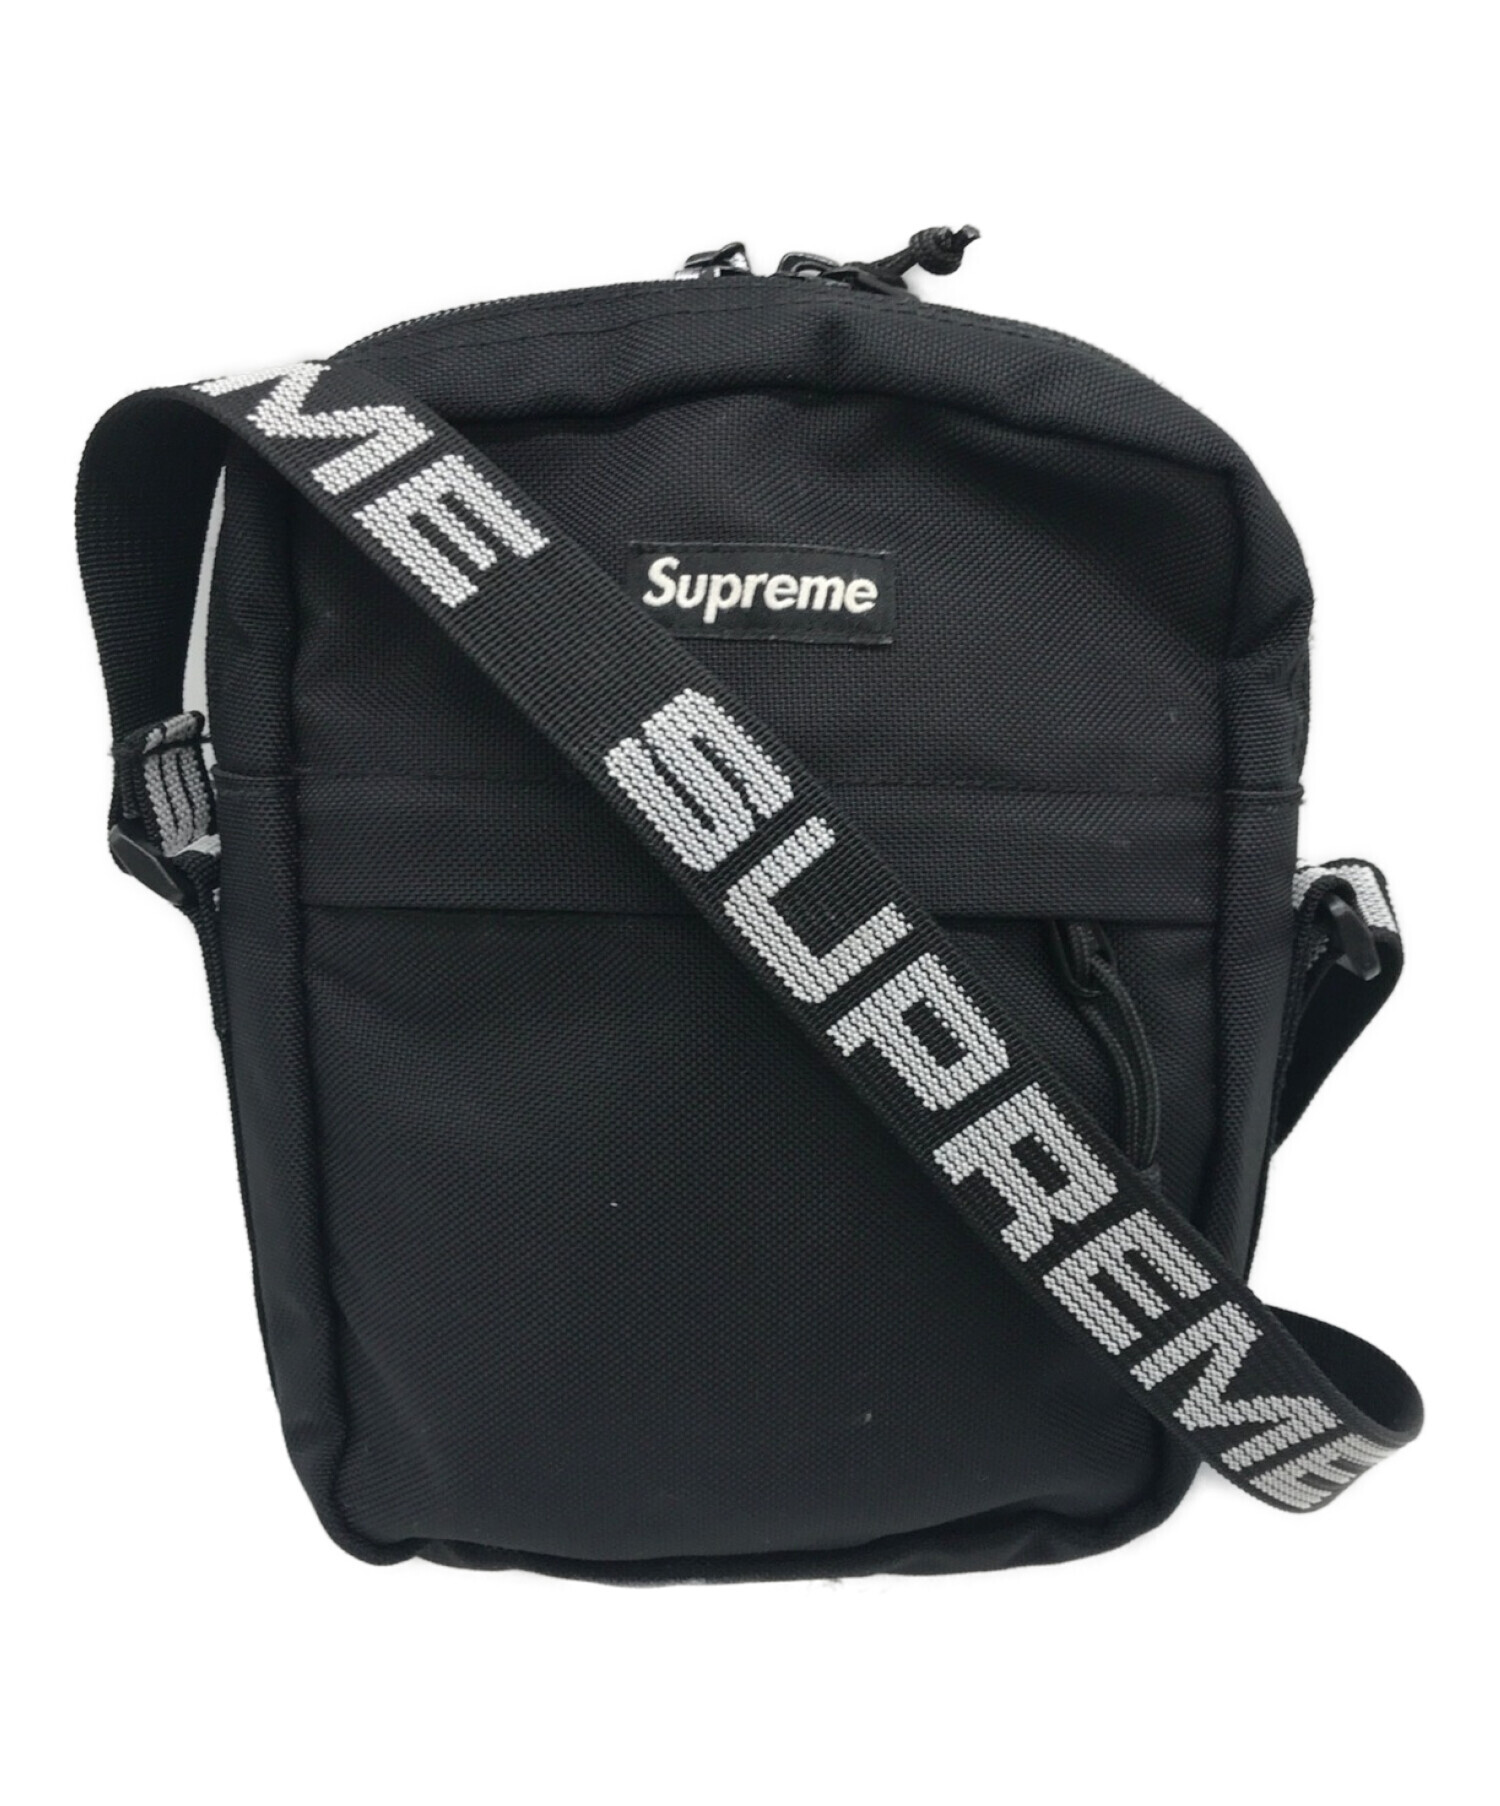 Supreme Shoulder Bag シュプリーム ショルダーバッグ 黒 - ファッション